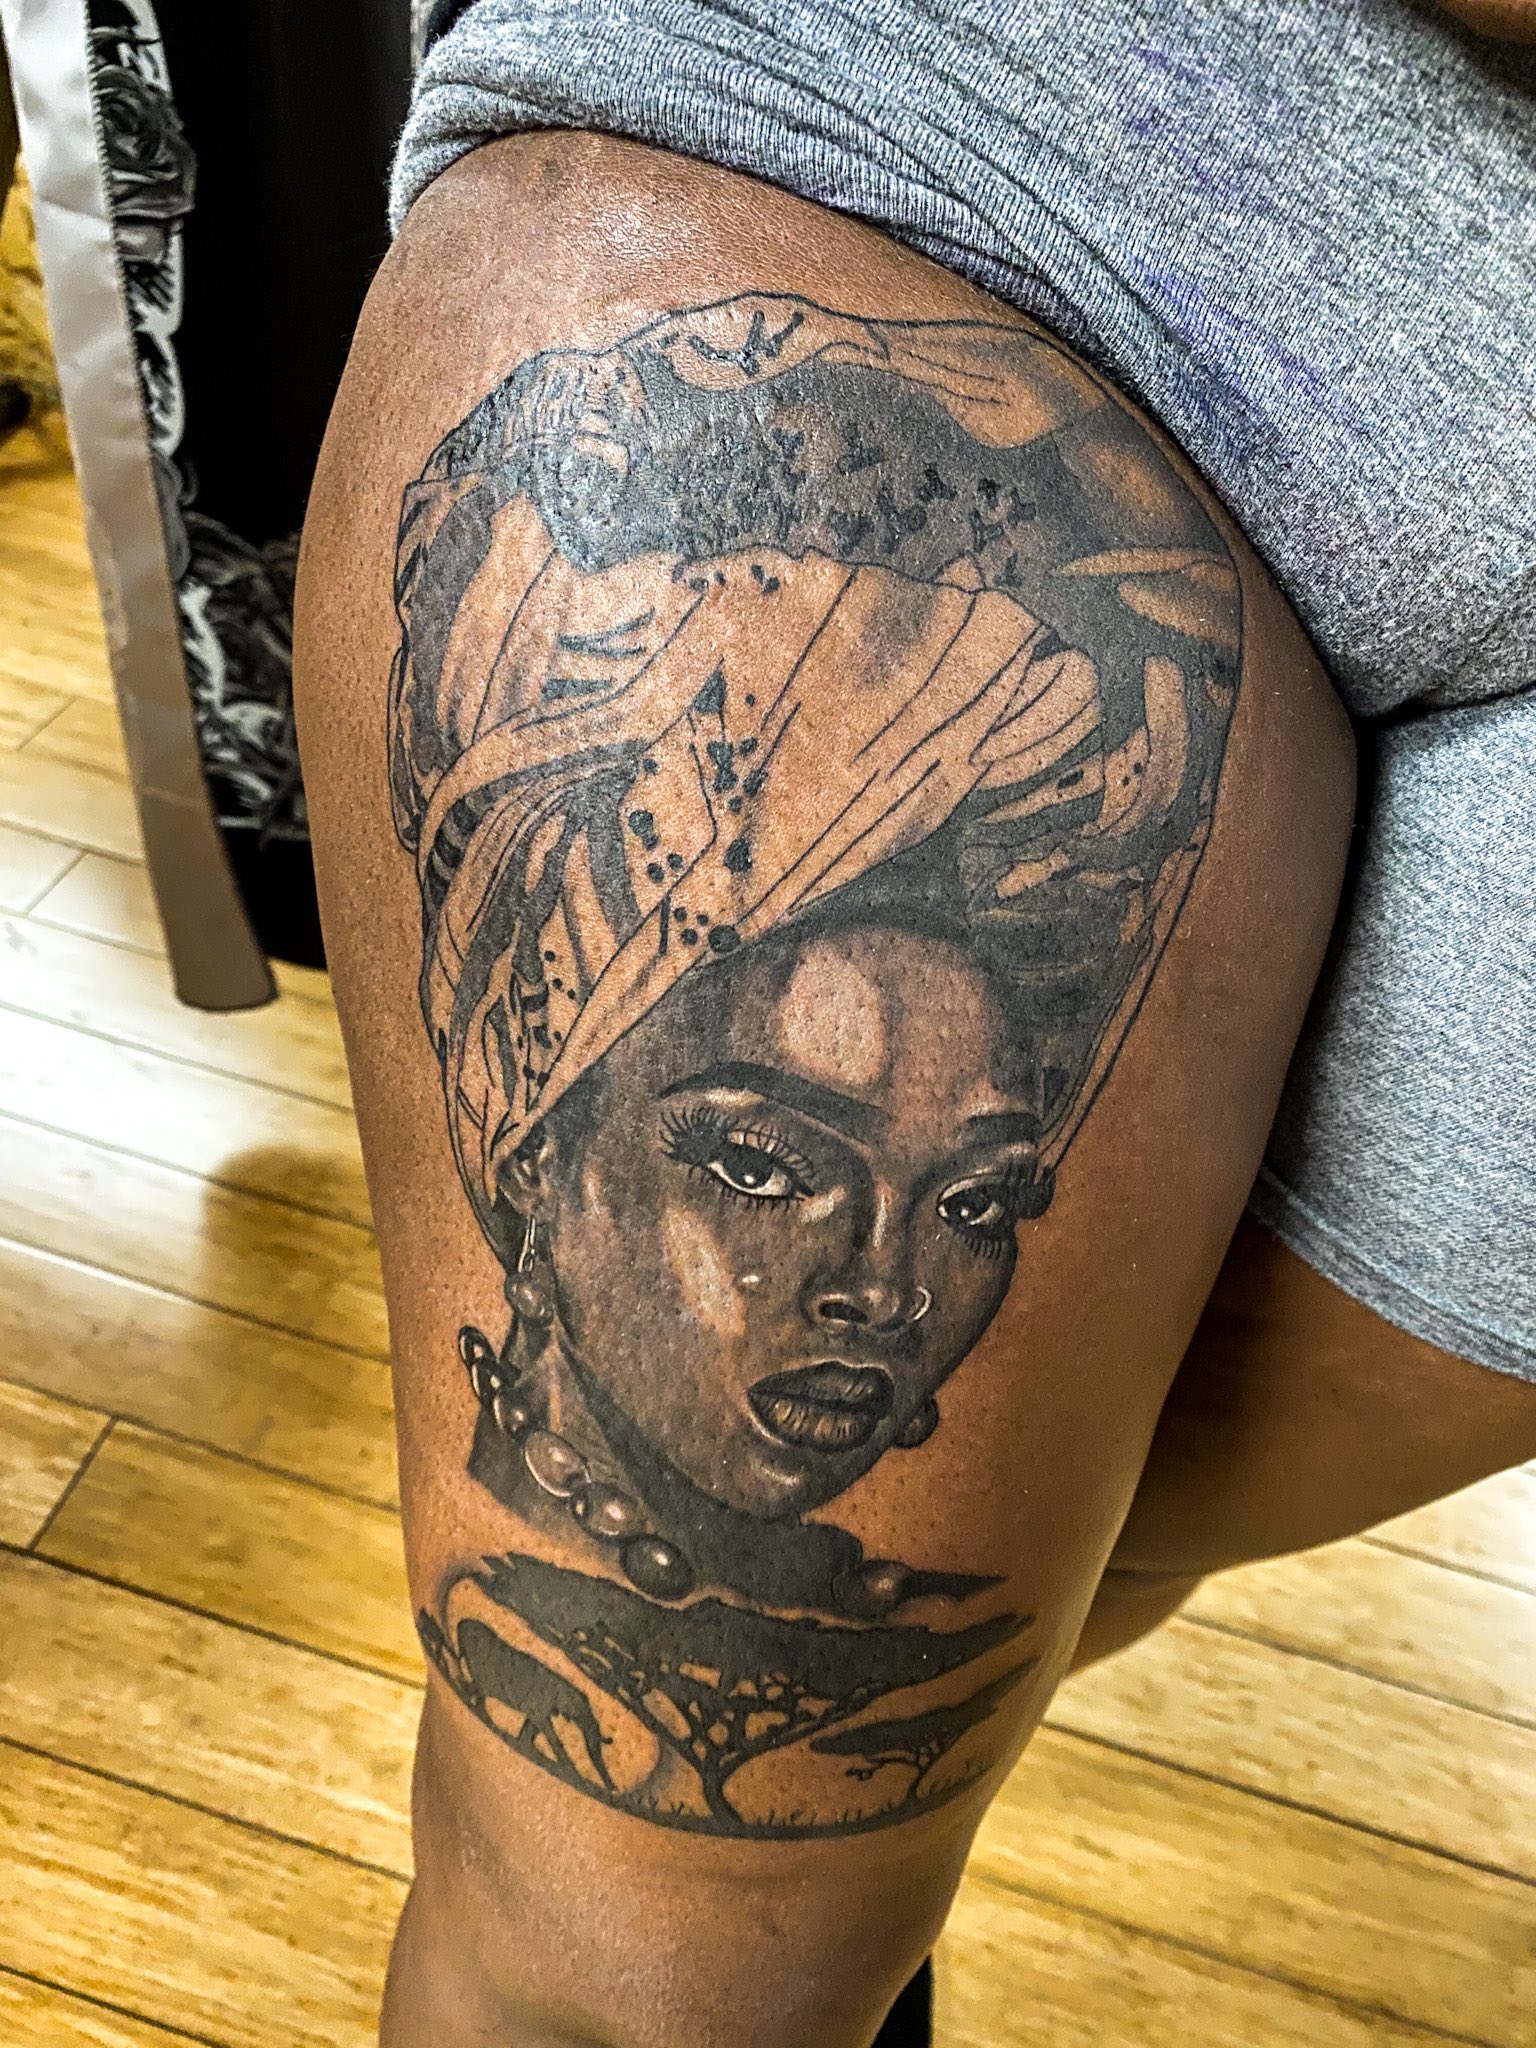 Left My Mark on X: "African Queen Style Tattoo Booking Info In My Bio. . . . #lmm #leftmymark #9mag #9magtattoo #darkskinbodyart #letmetellmystory #chicago #chicagotattoo #chicagotattooartist #tattooartist #chicagotattooshops #chicagotattooshop #design ...